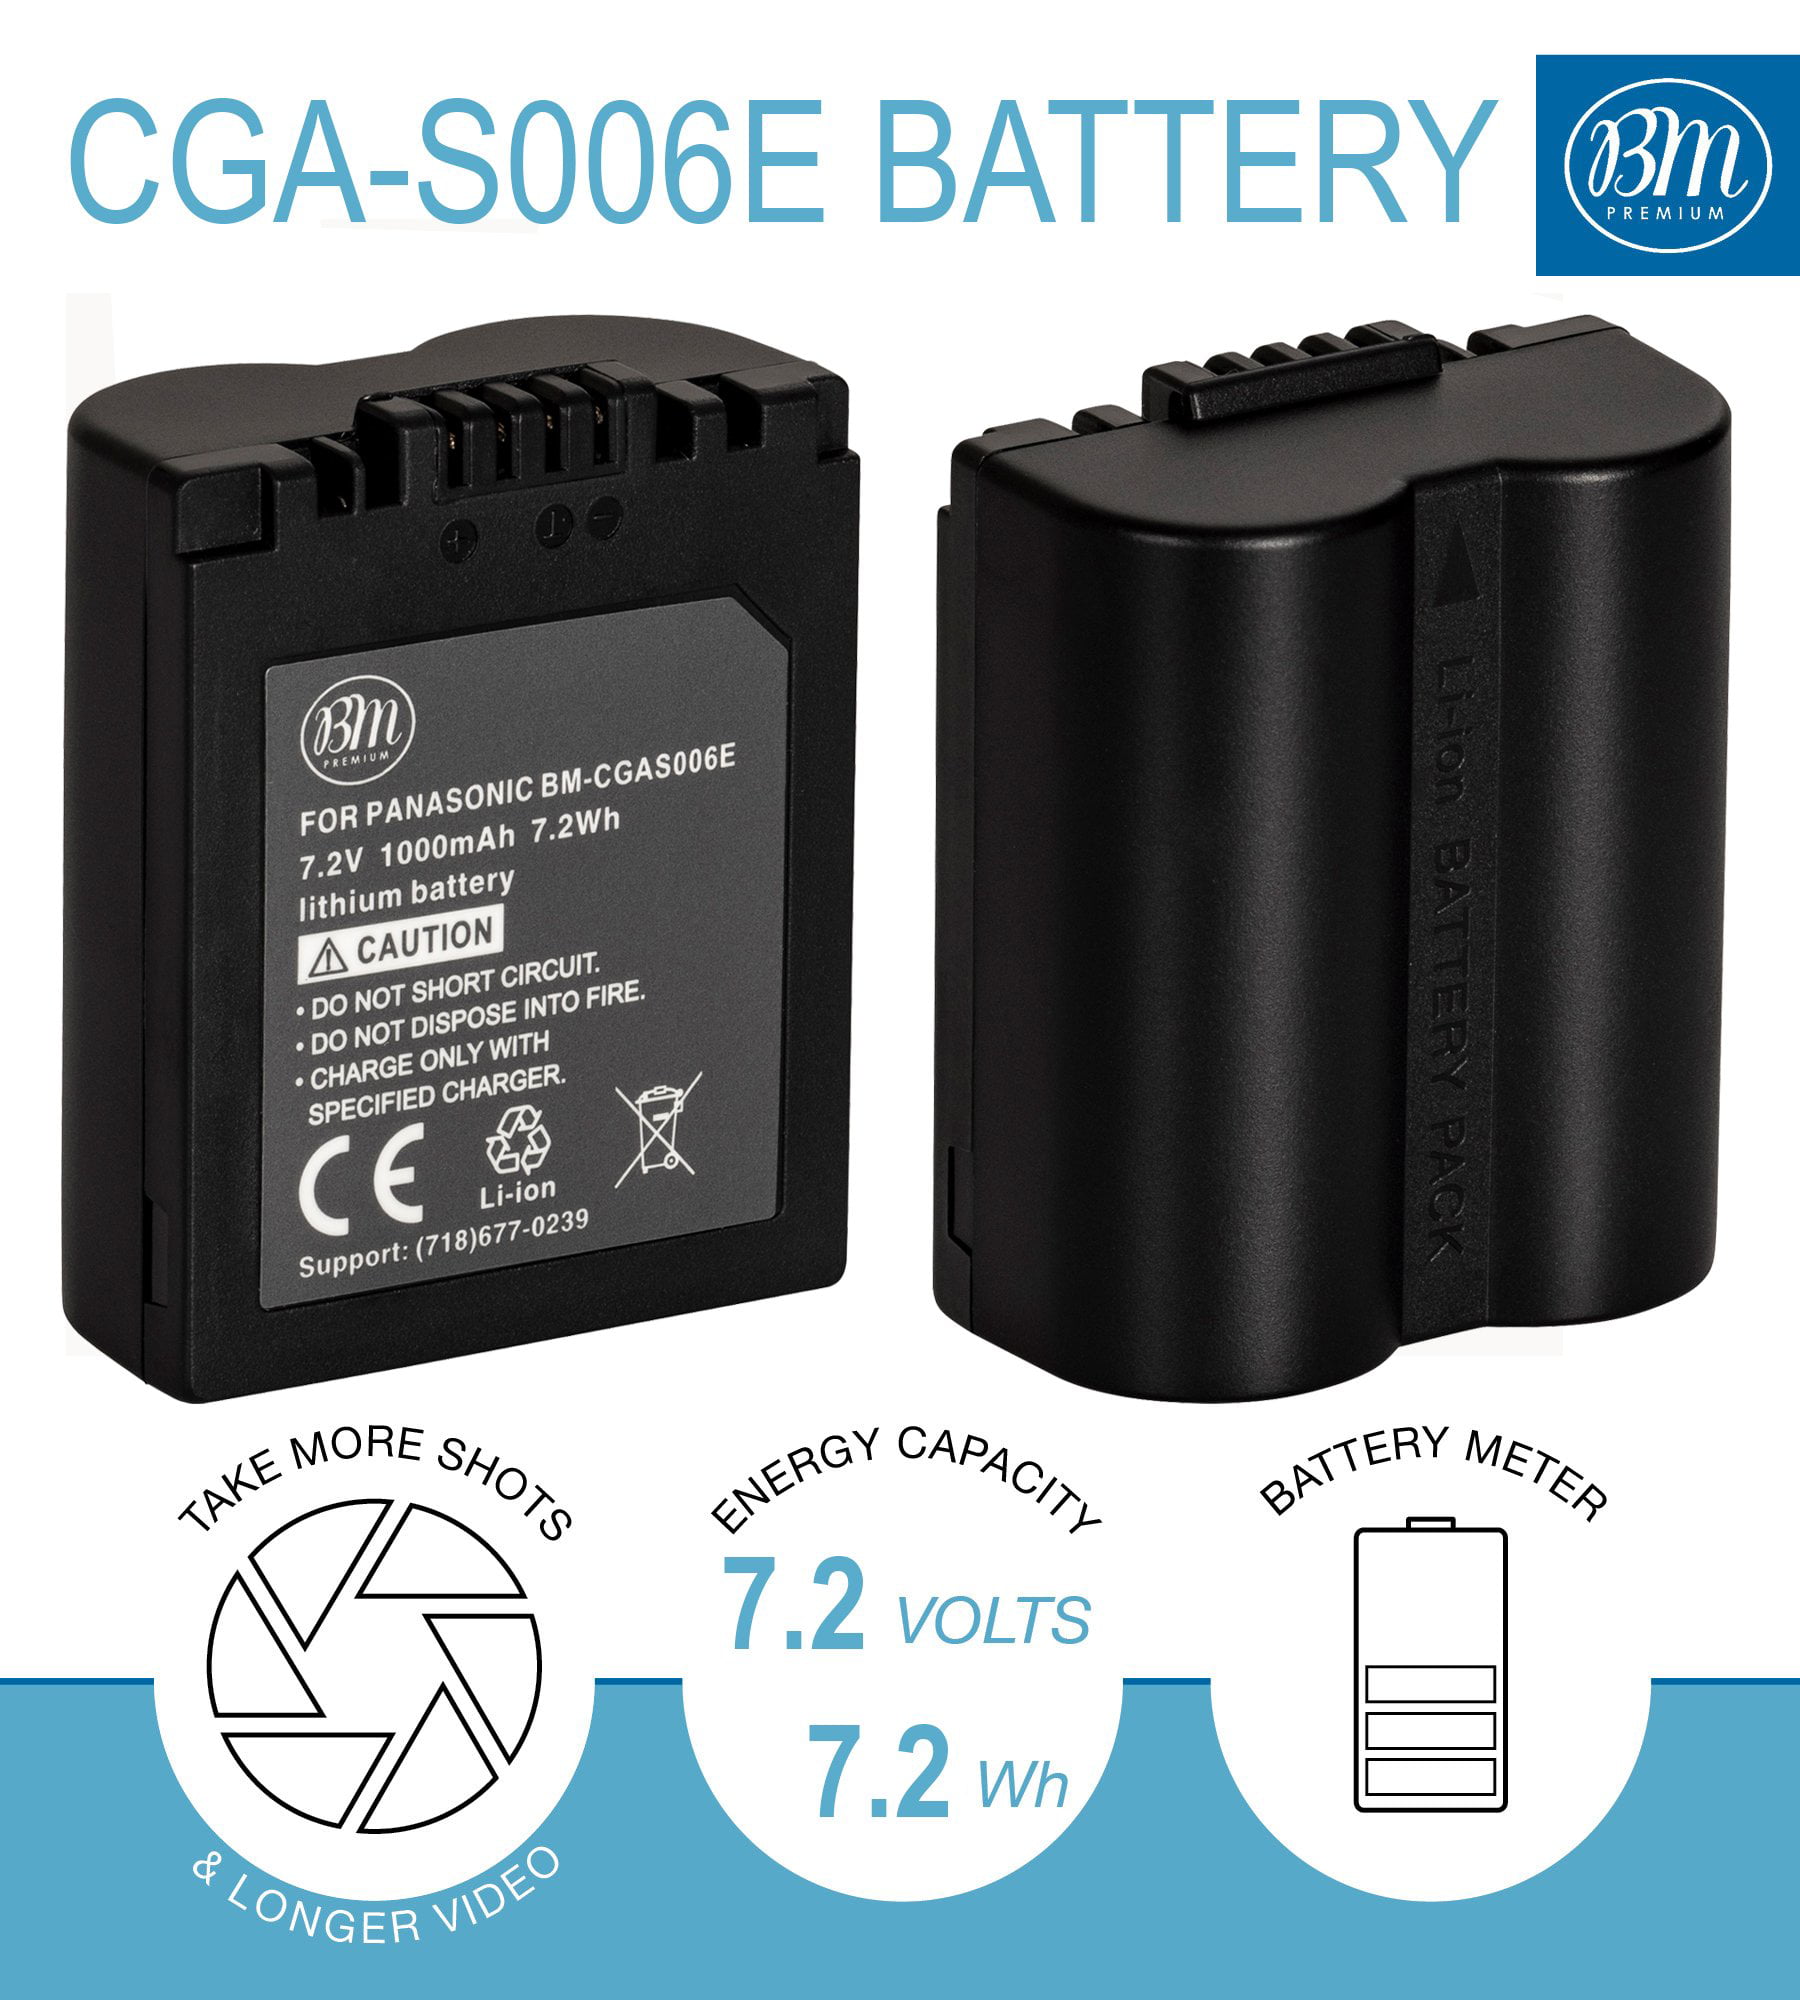 CGR-S006A Battery for Panasonic Lumix DMC-FZ18 FZ28 FZ8 